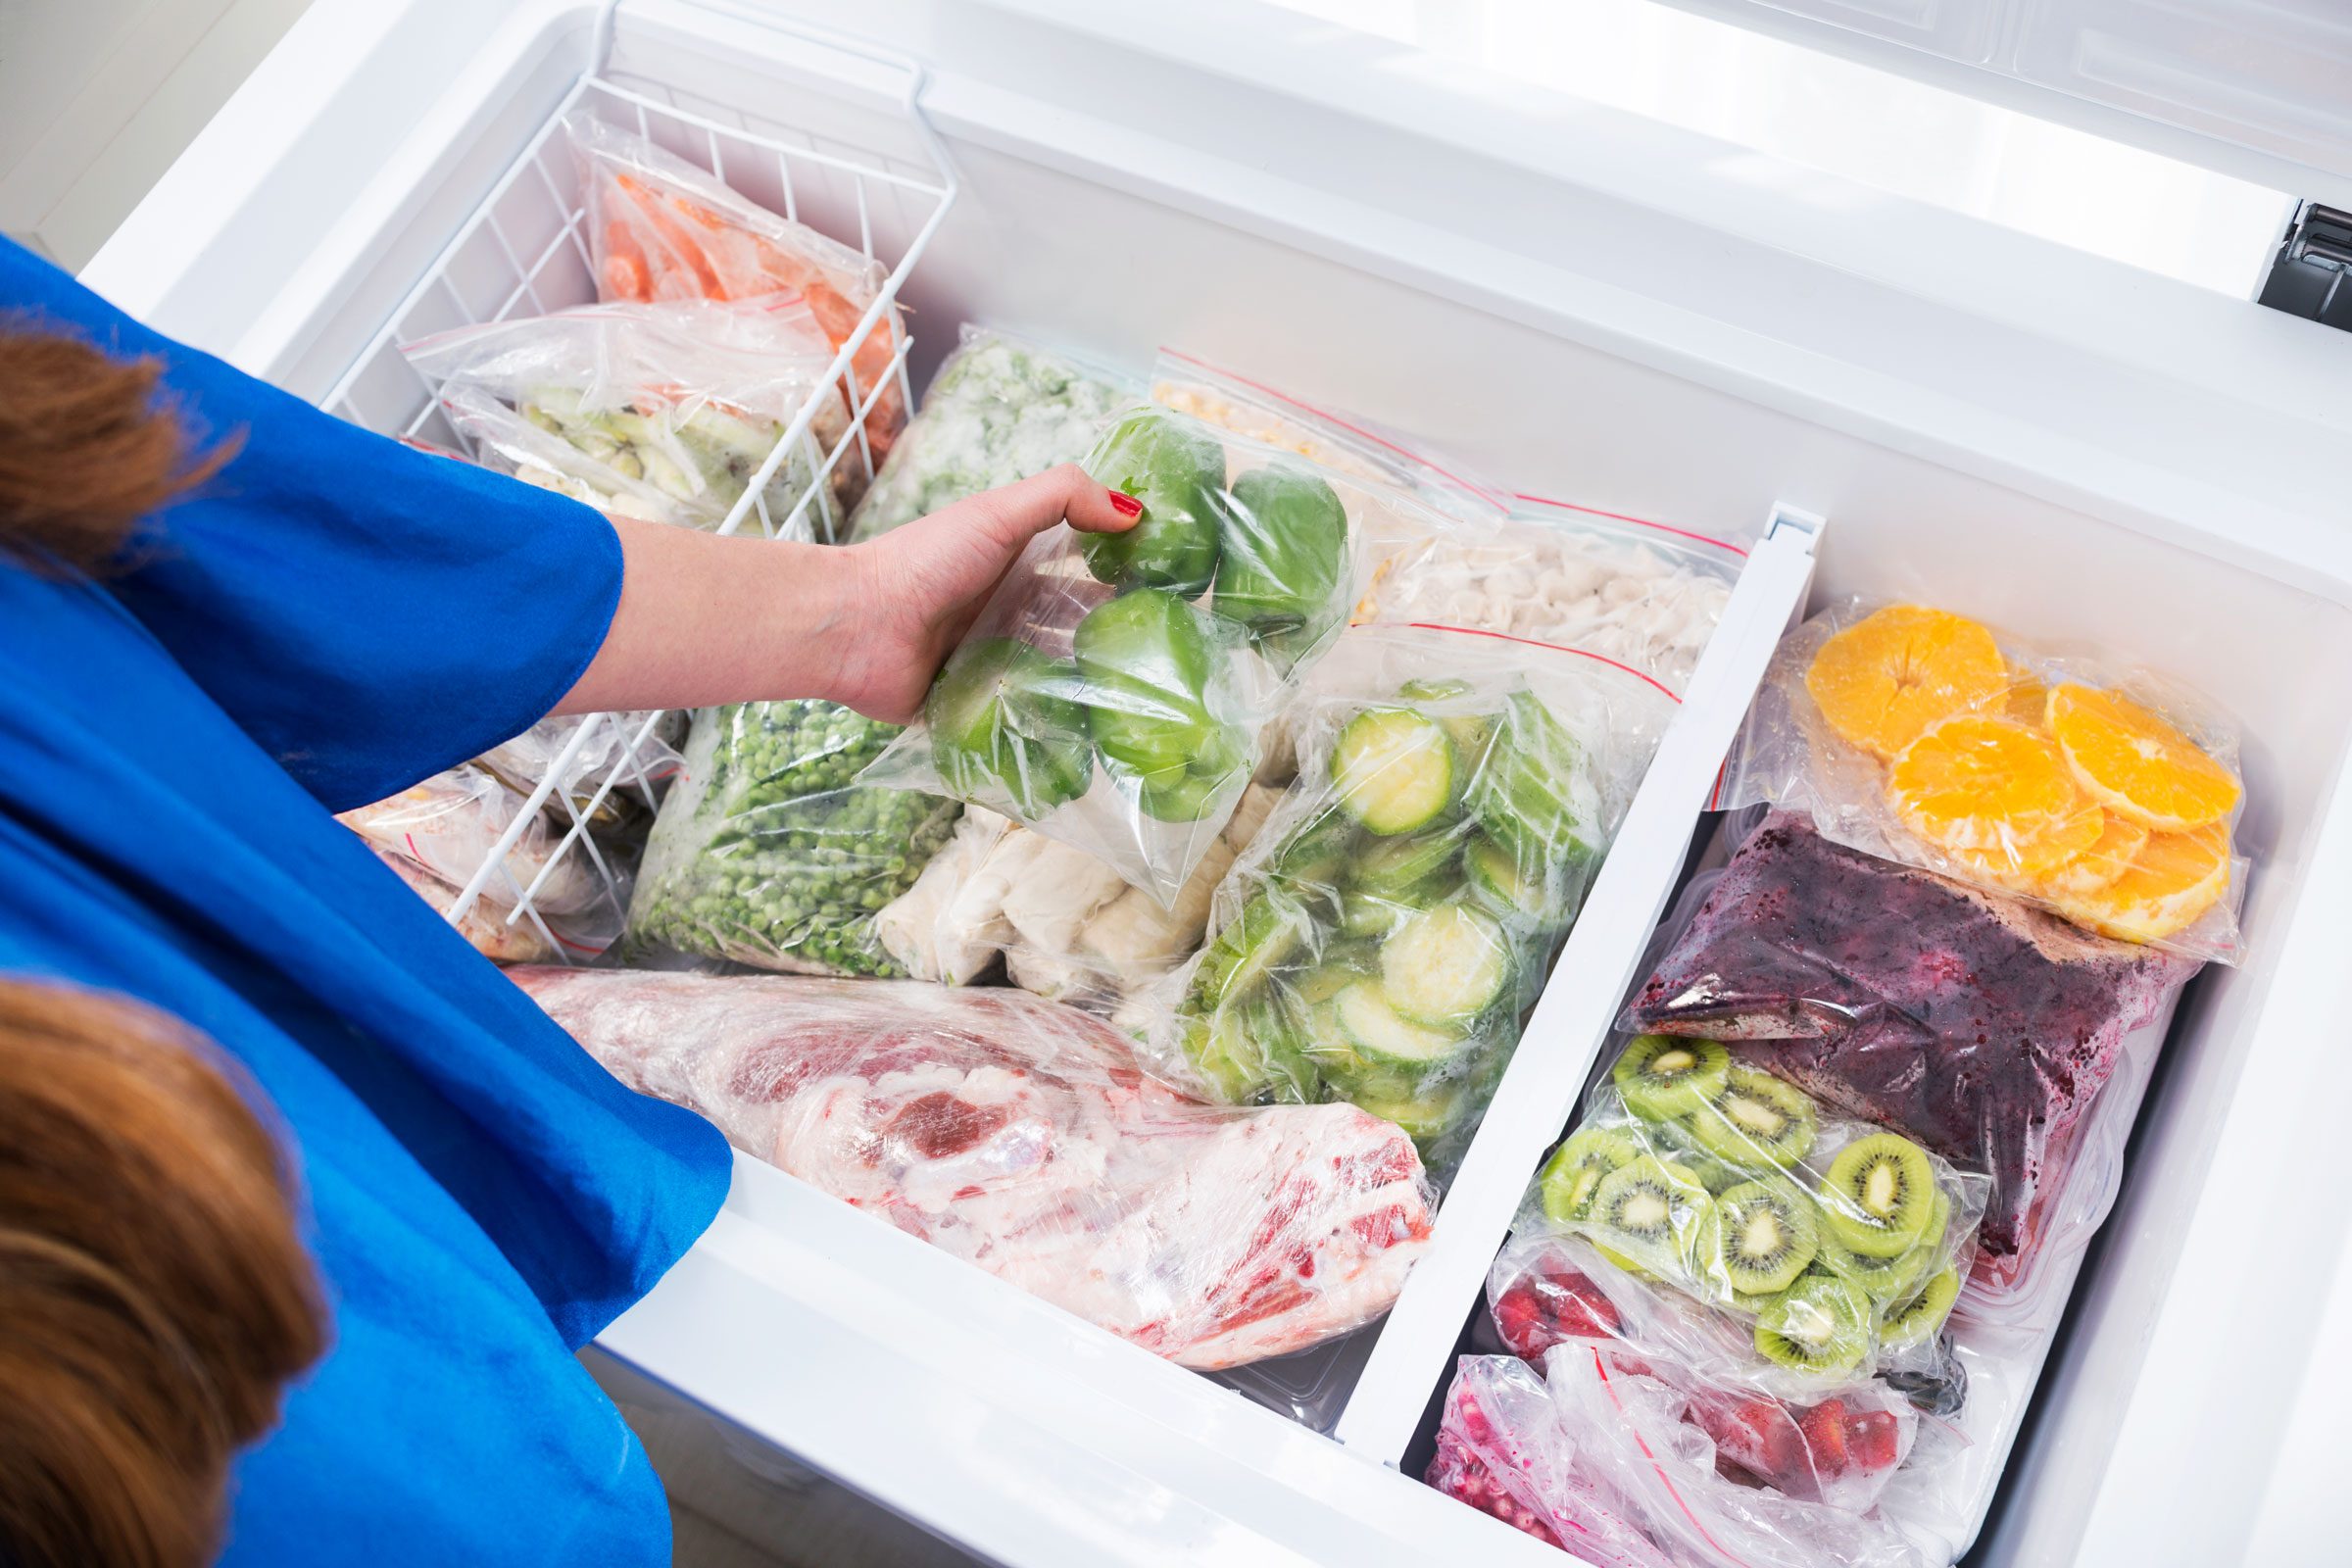 Tips to help you Buy & Bulk & Organize your Freezer